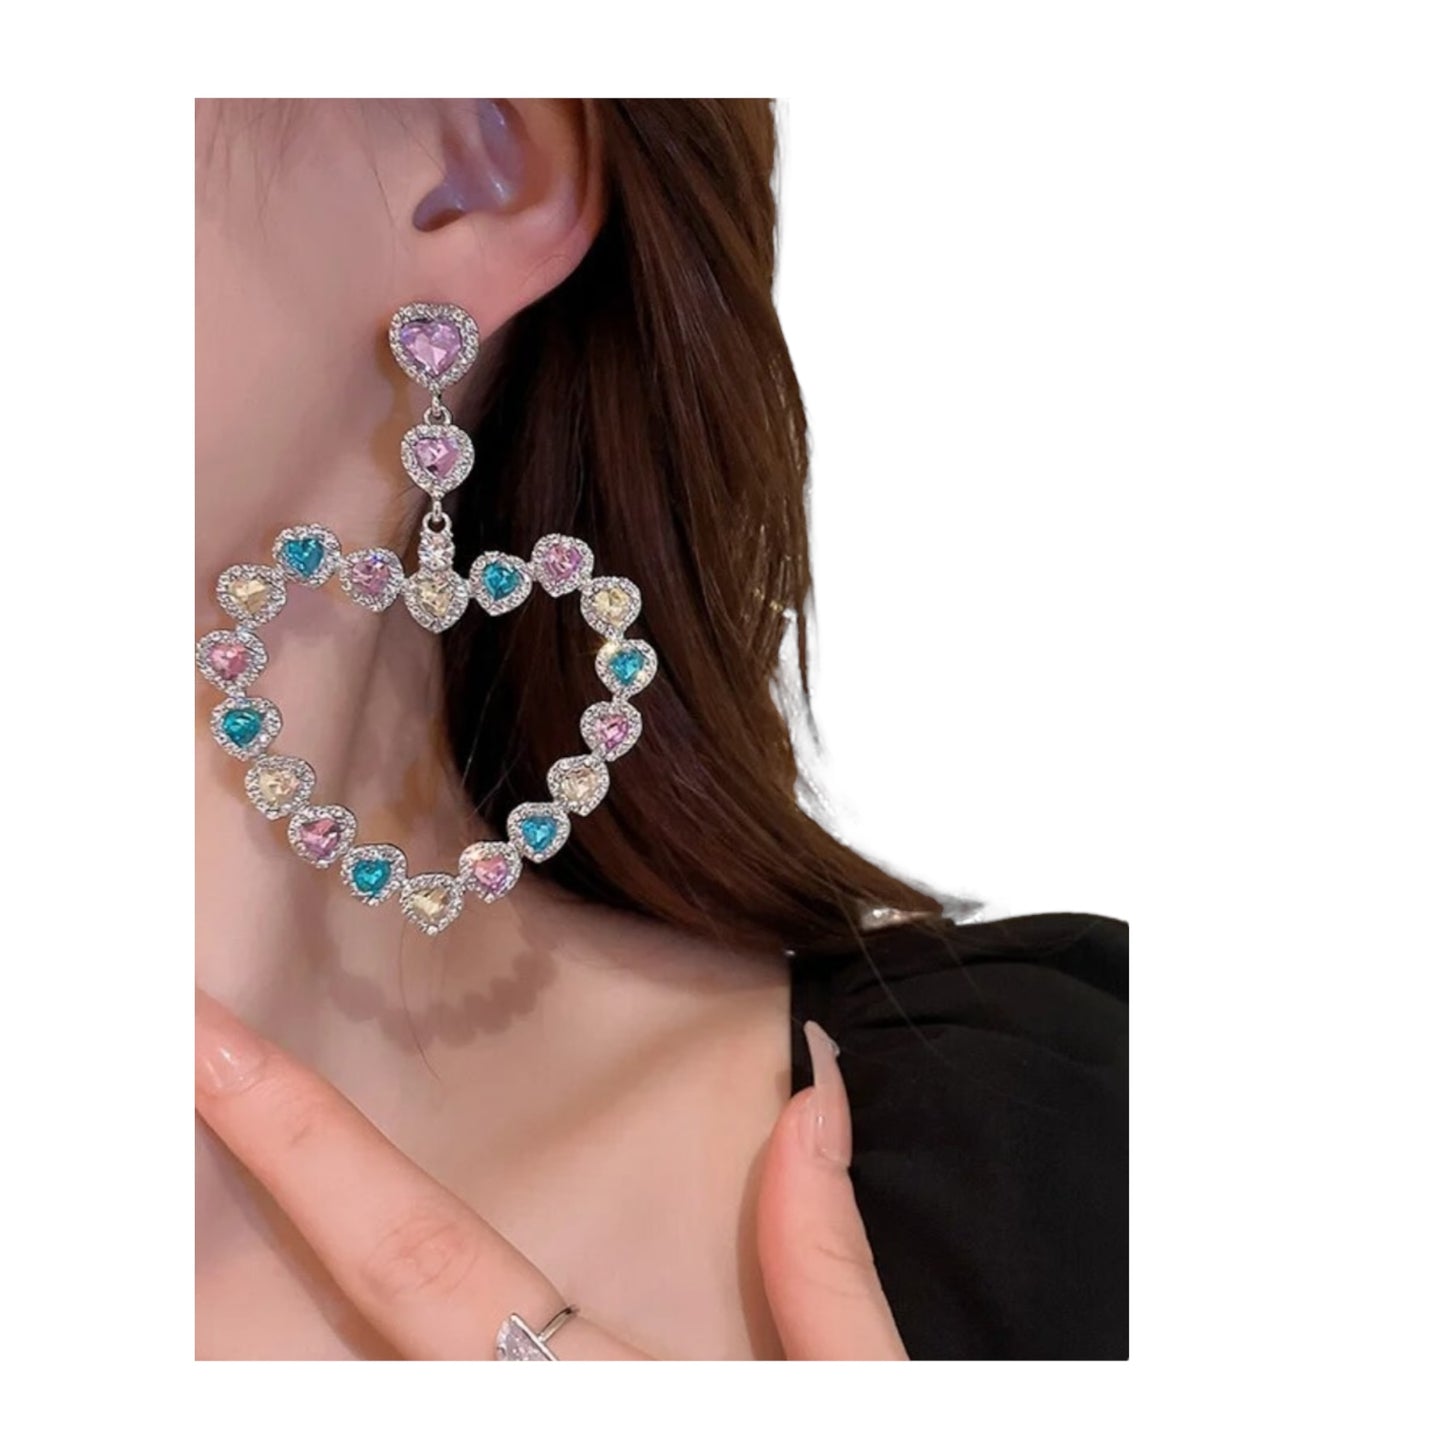 Big multi color rhinestone heart earrings